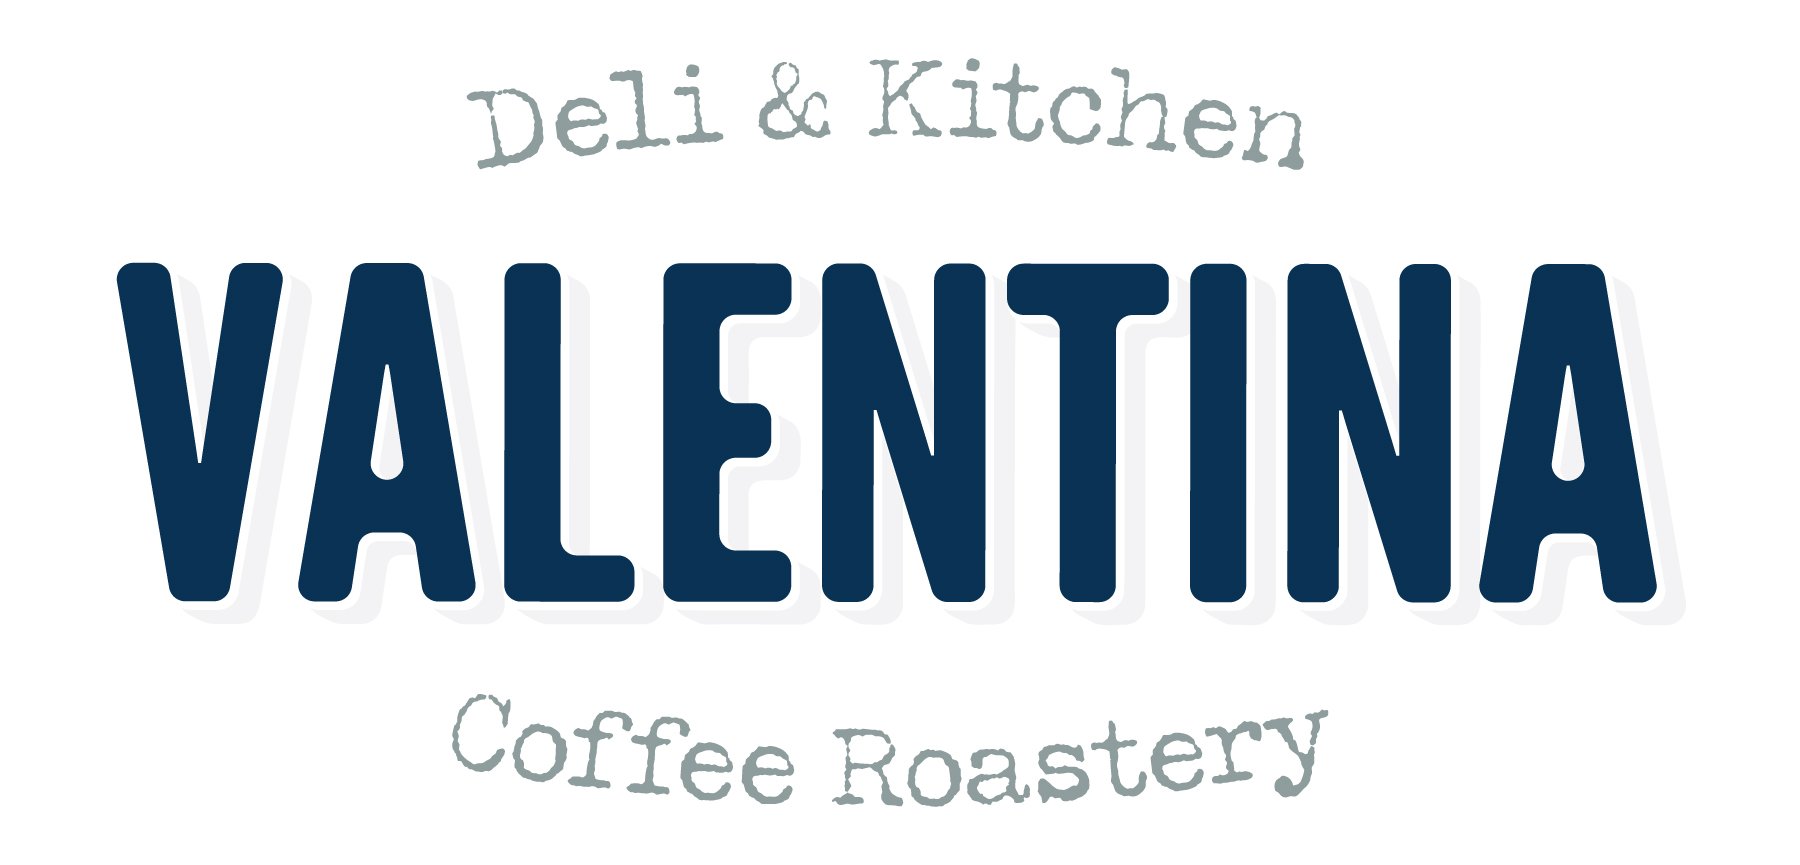 VALENTINA Deli & Kitchen - Coffee Roastery